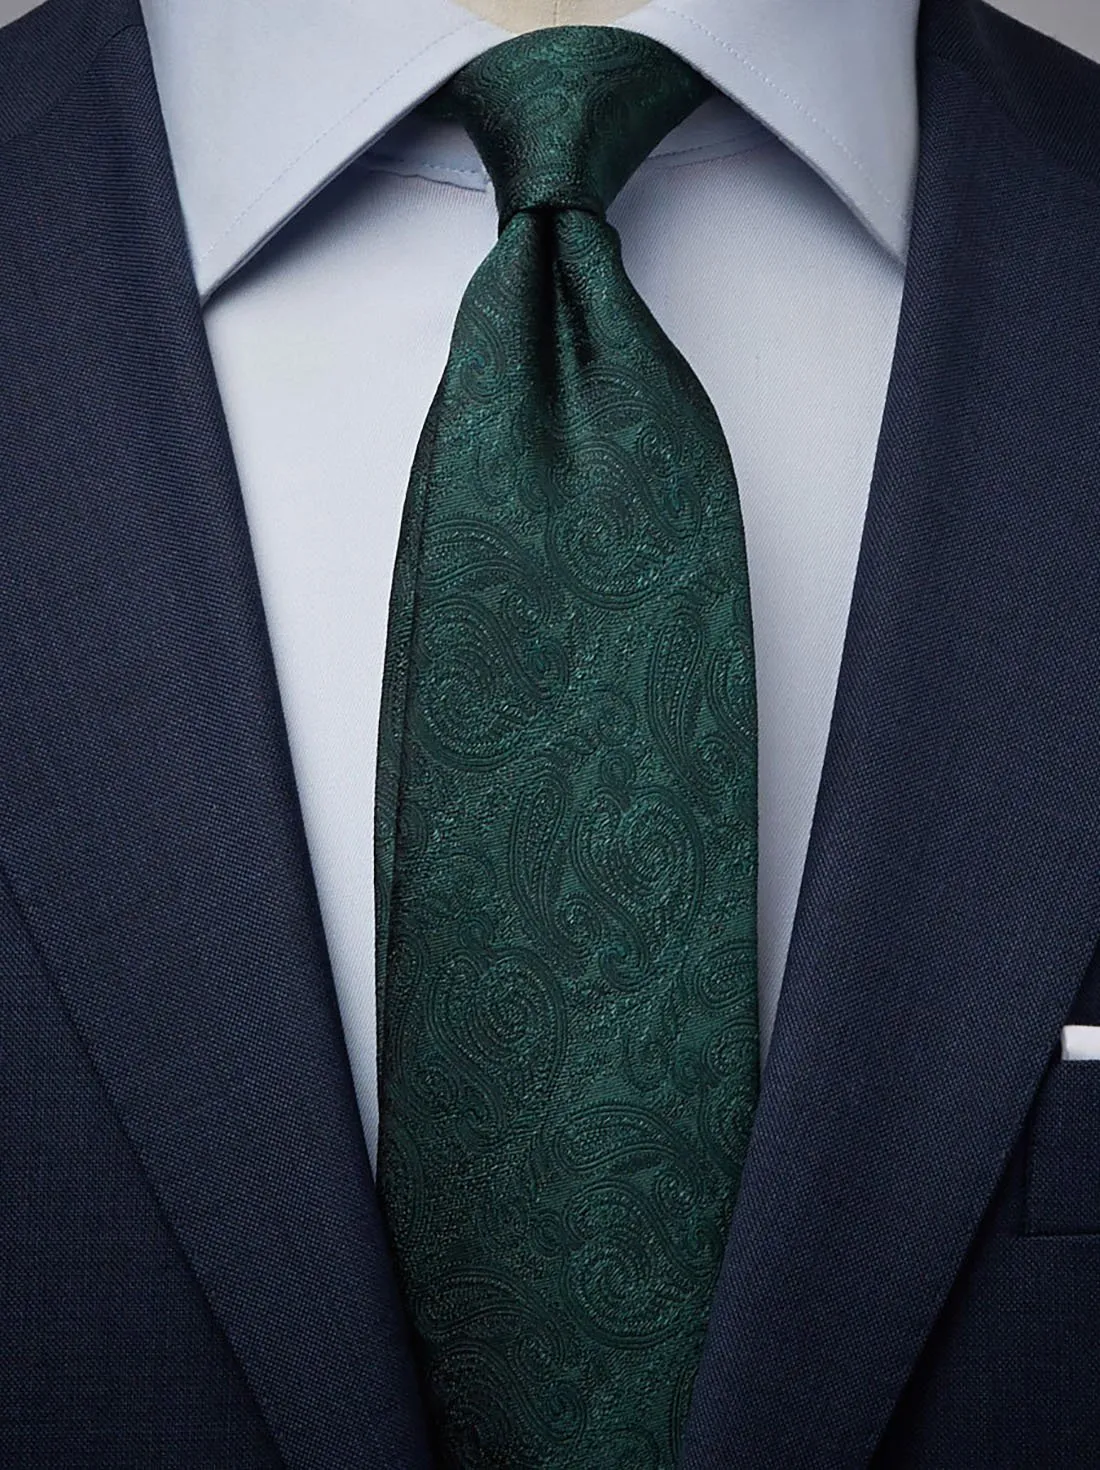 Green Tie Formal